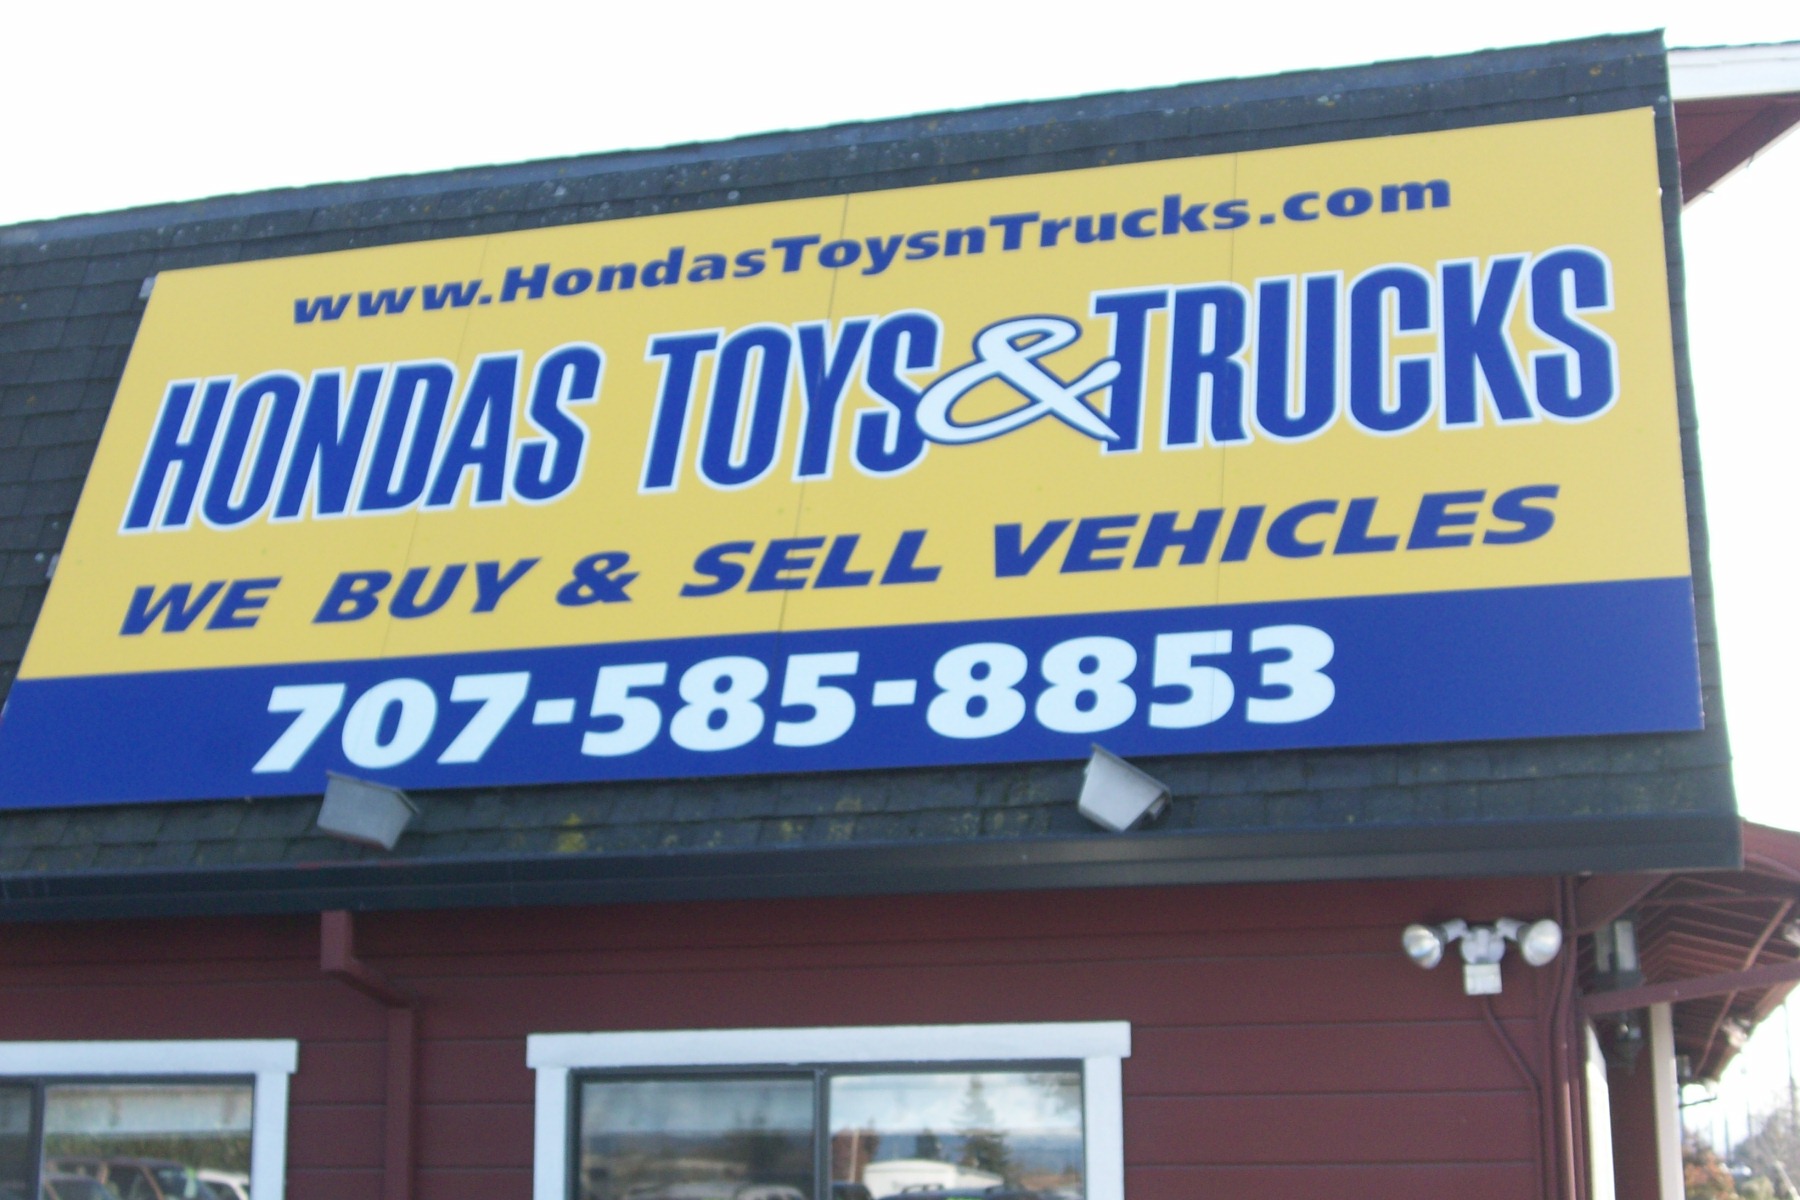 Honda toys and trucks santa rosa california #3